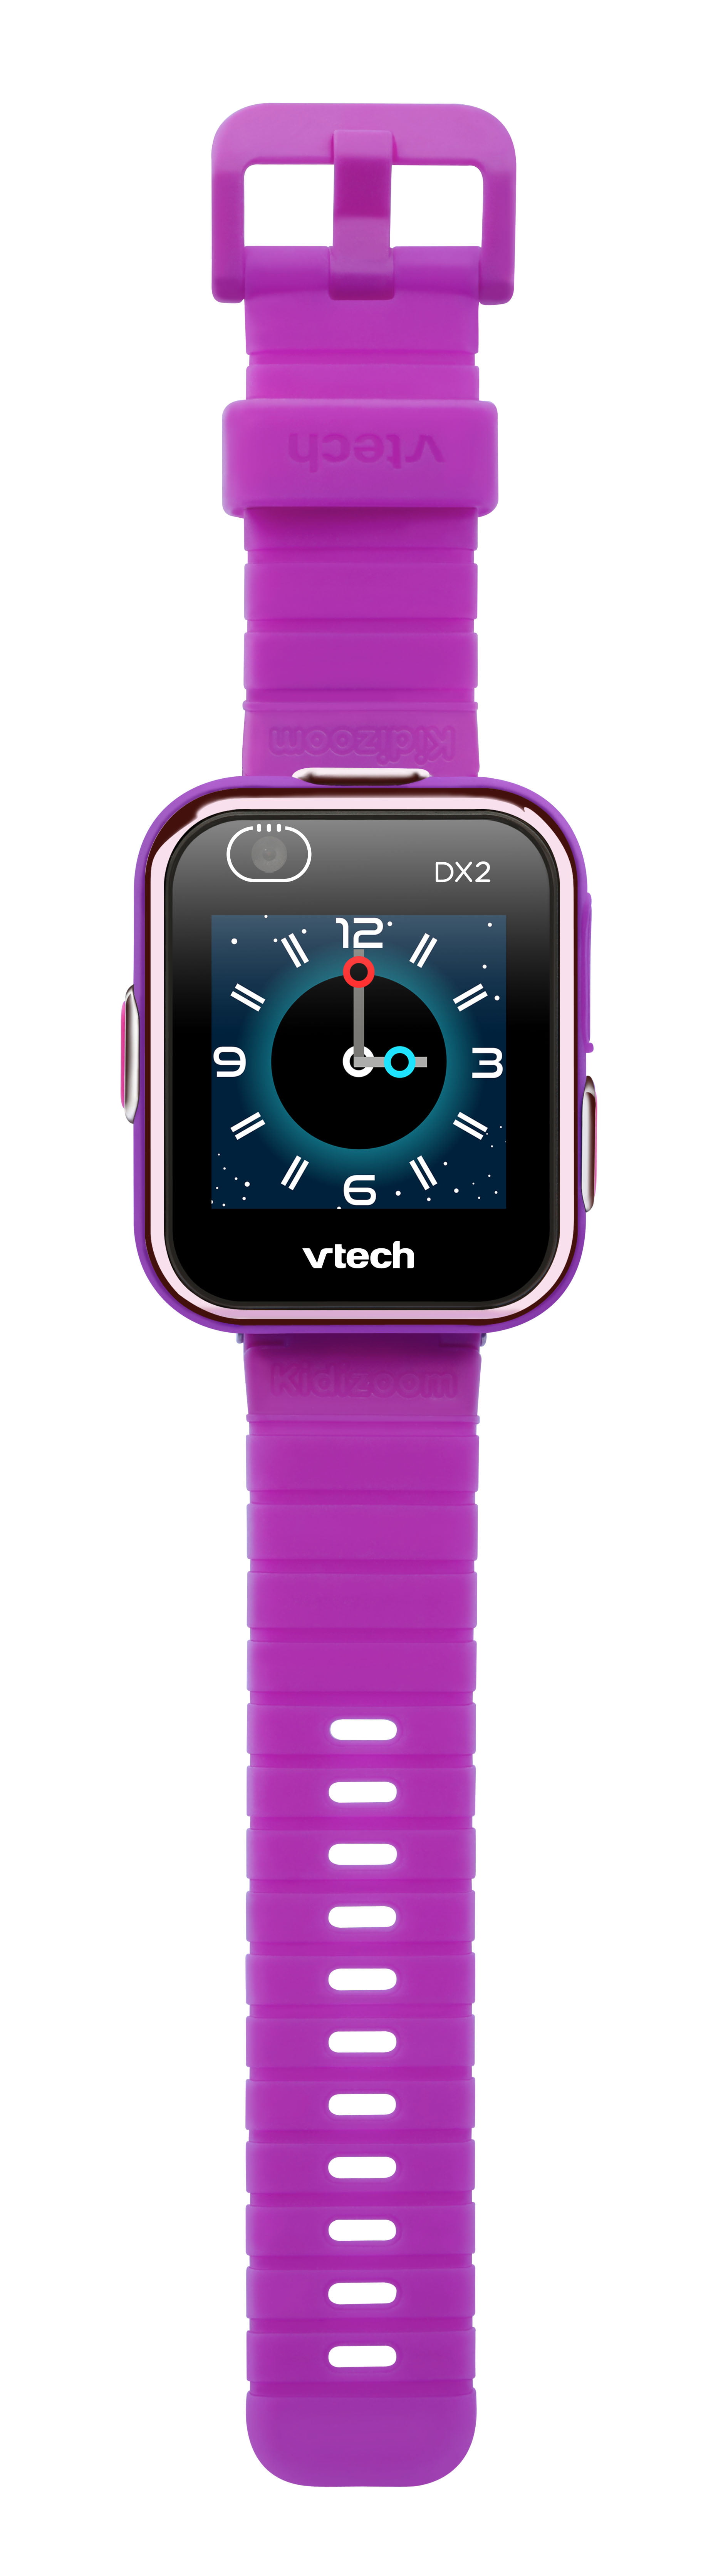 vtech watch wristband